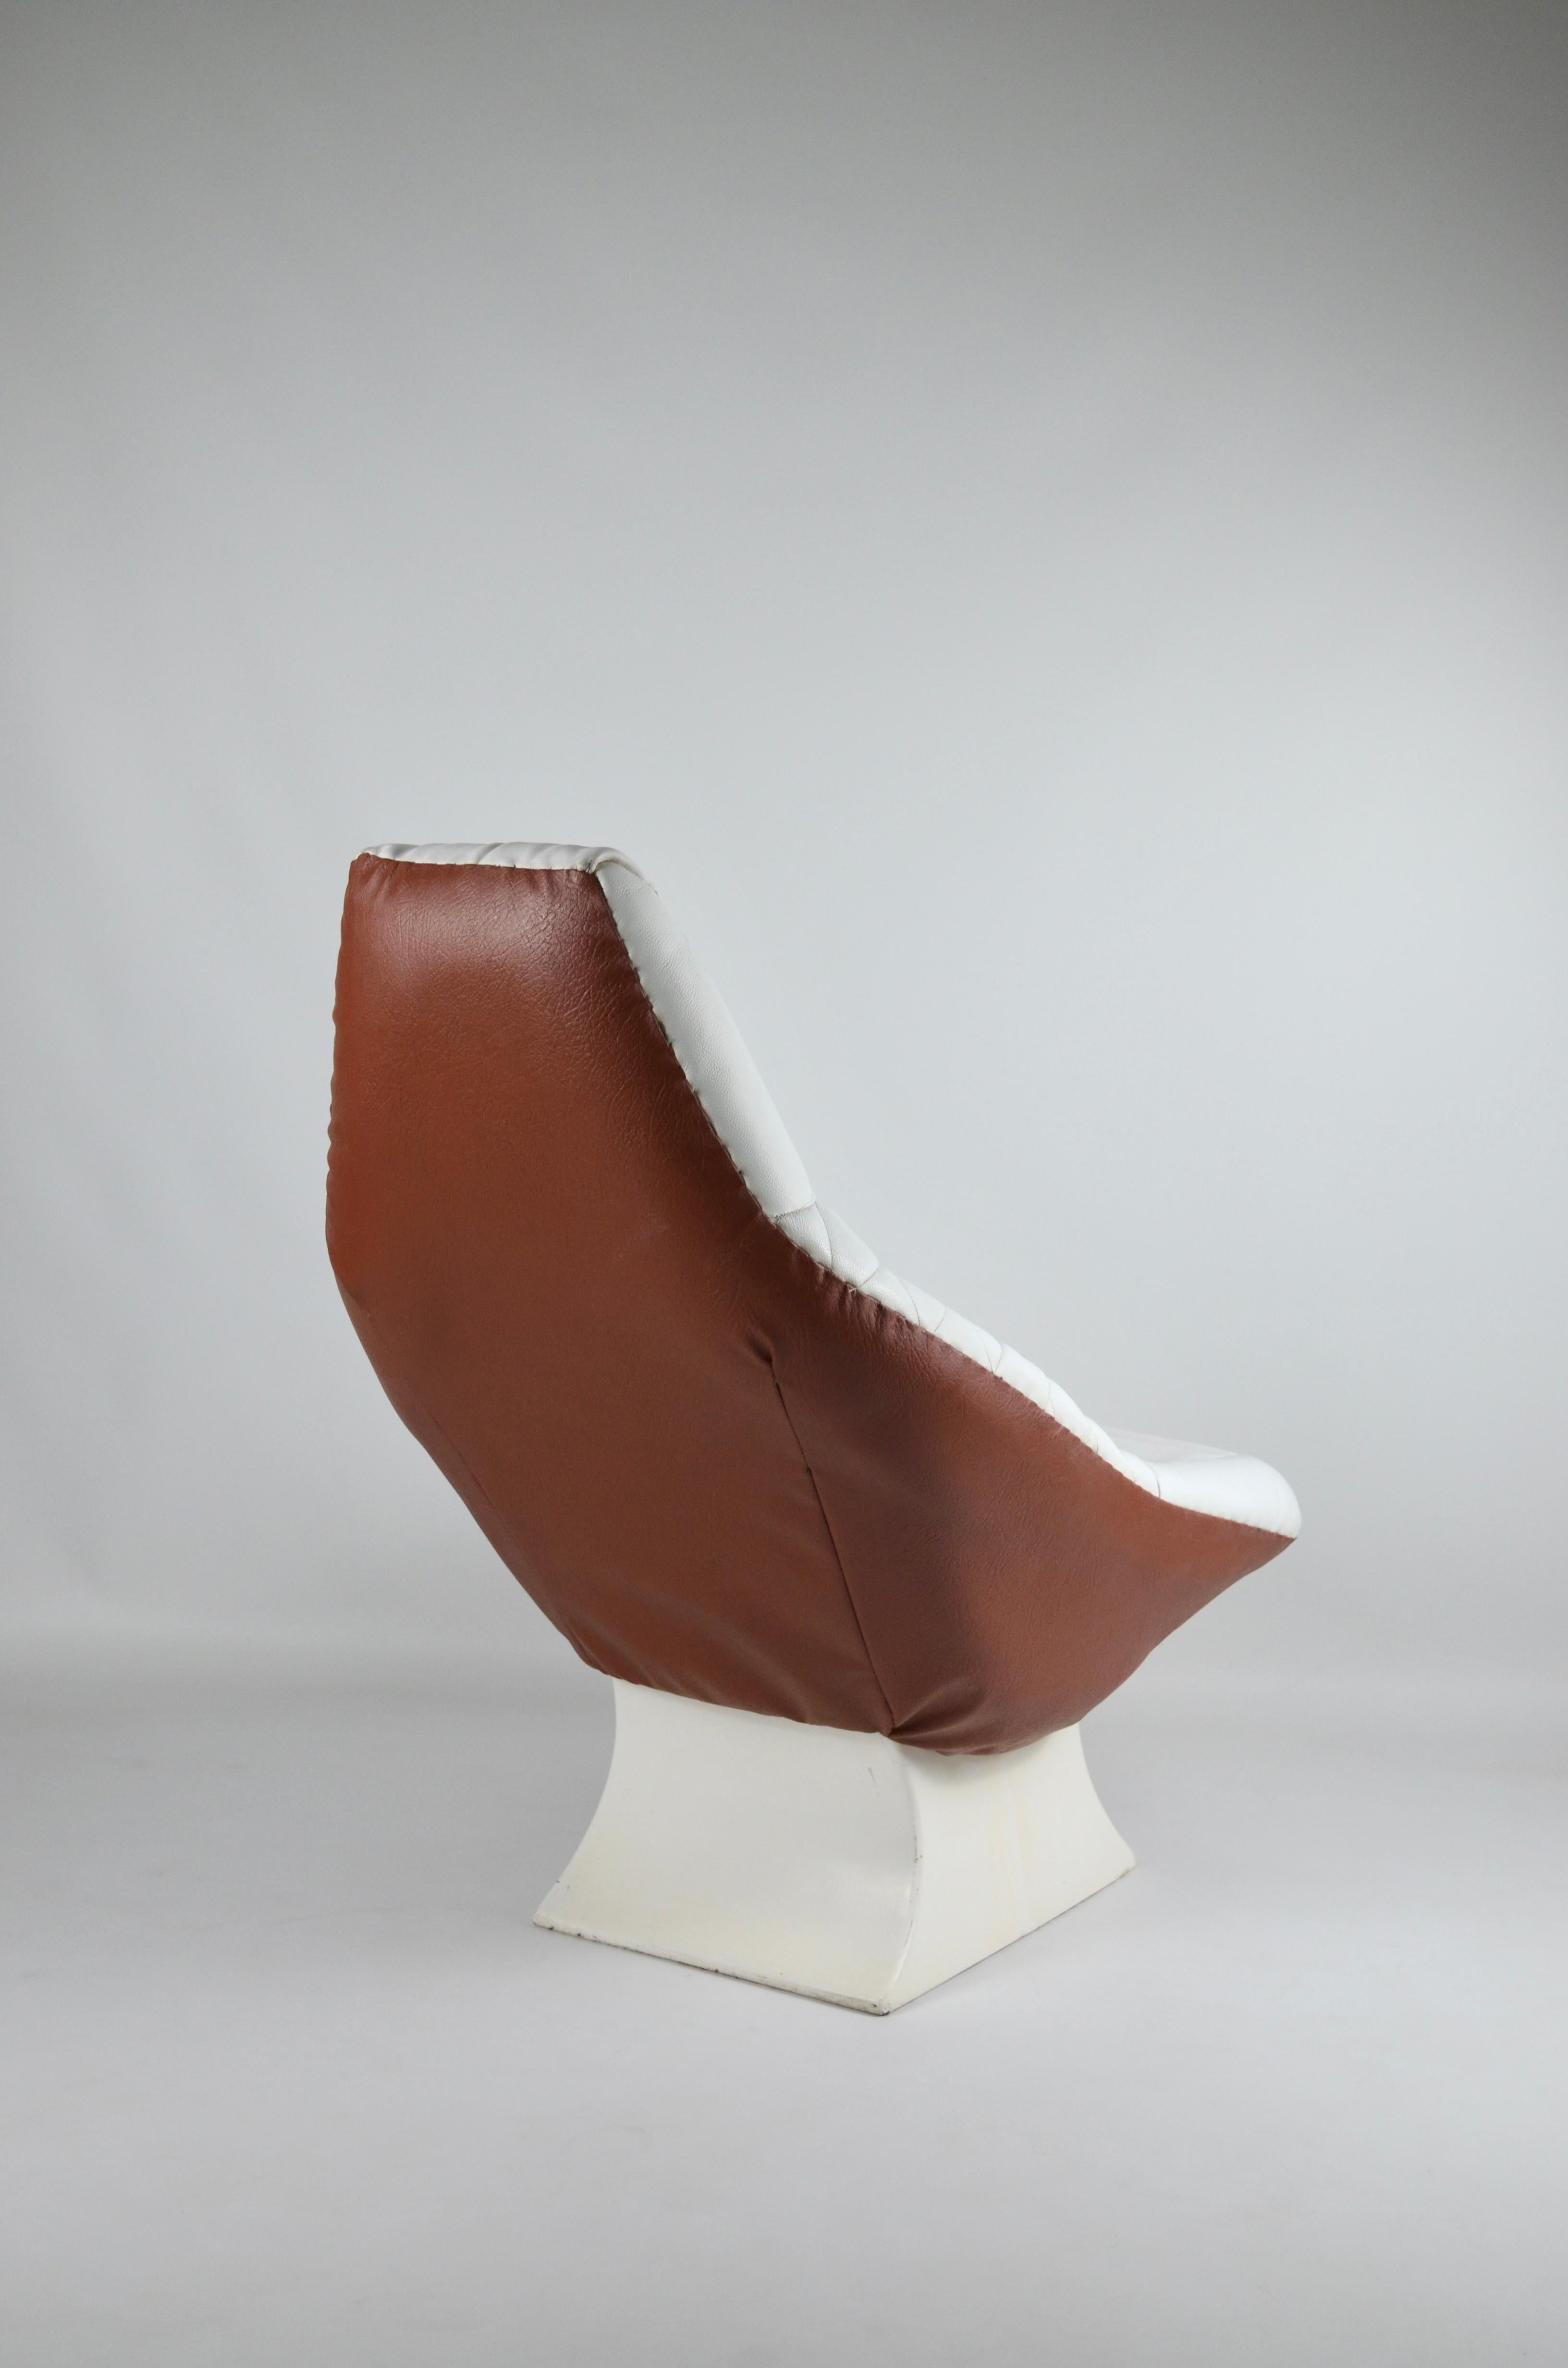 Vintage-Sessel aus Leder und Fiberglas im Space- Age-Stil, 1970er Jahre (Space Age)